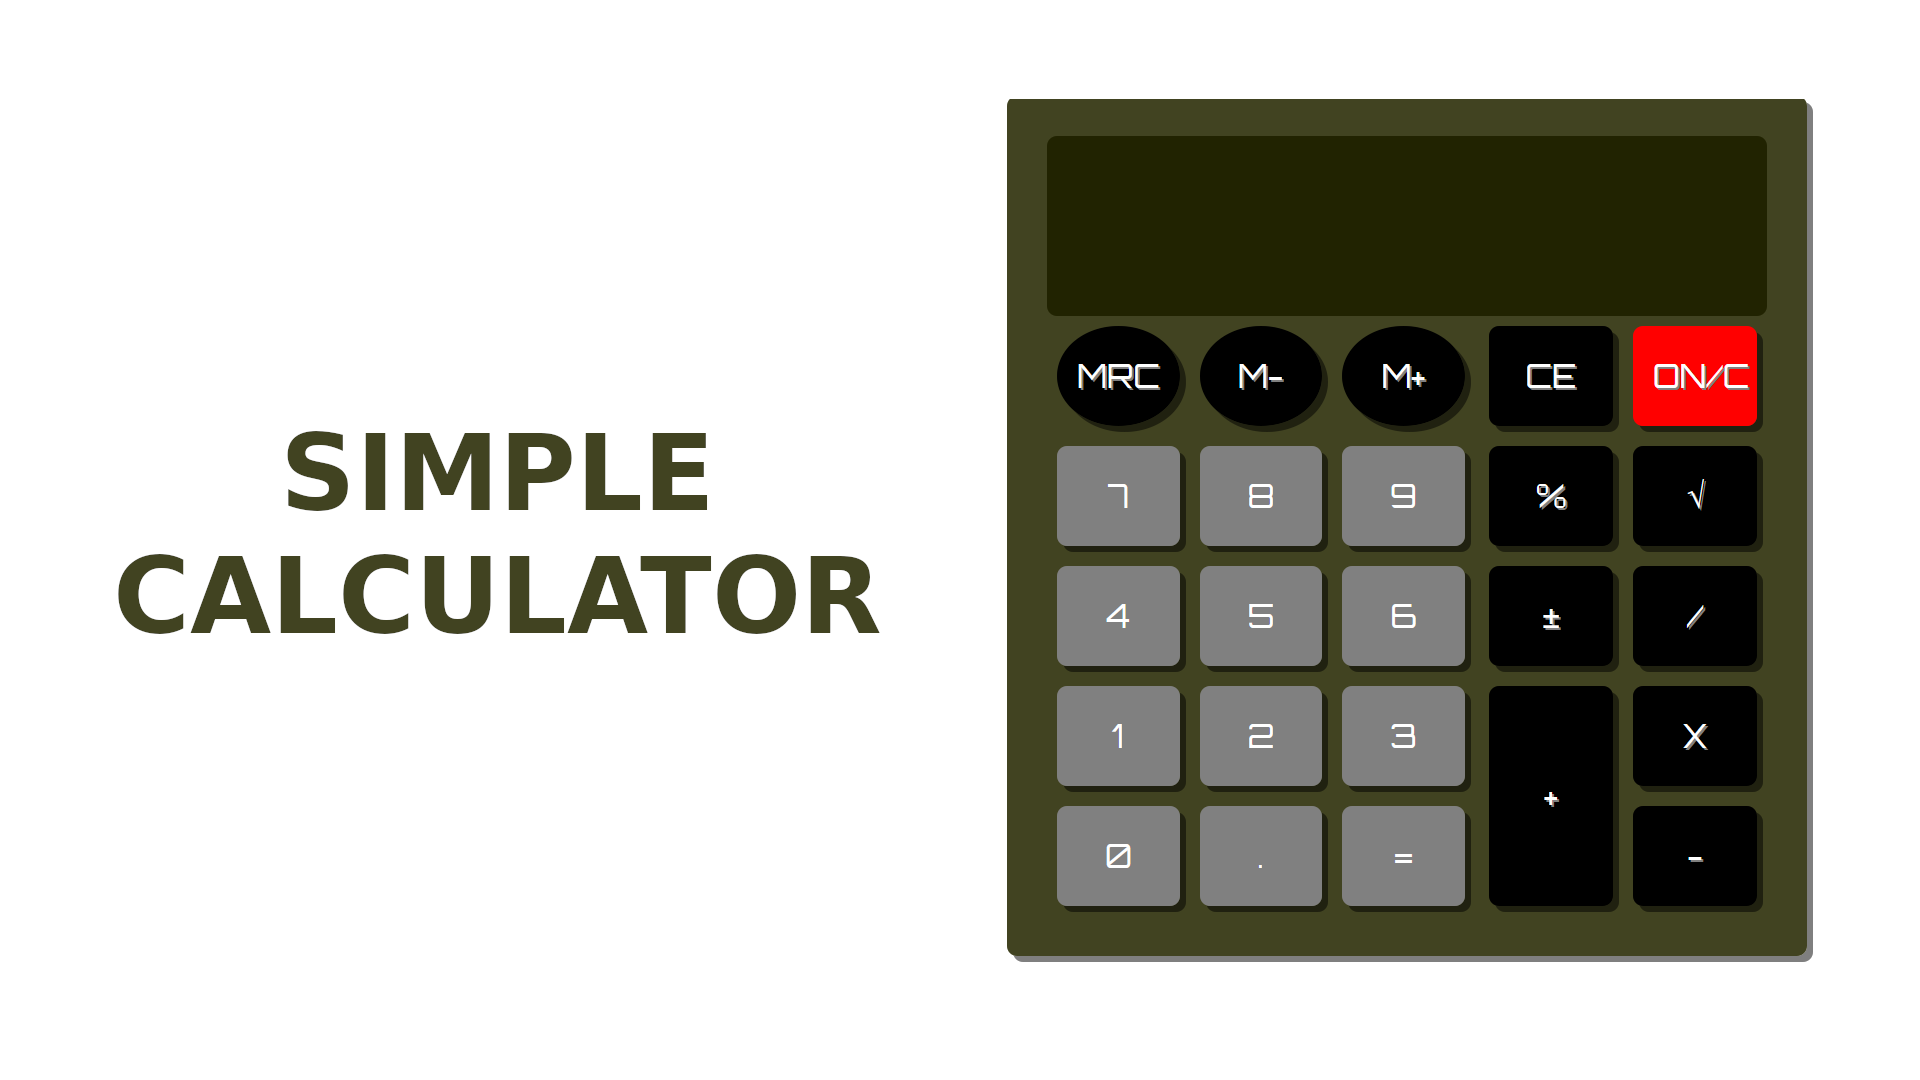 Simple calculator image